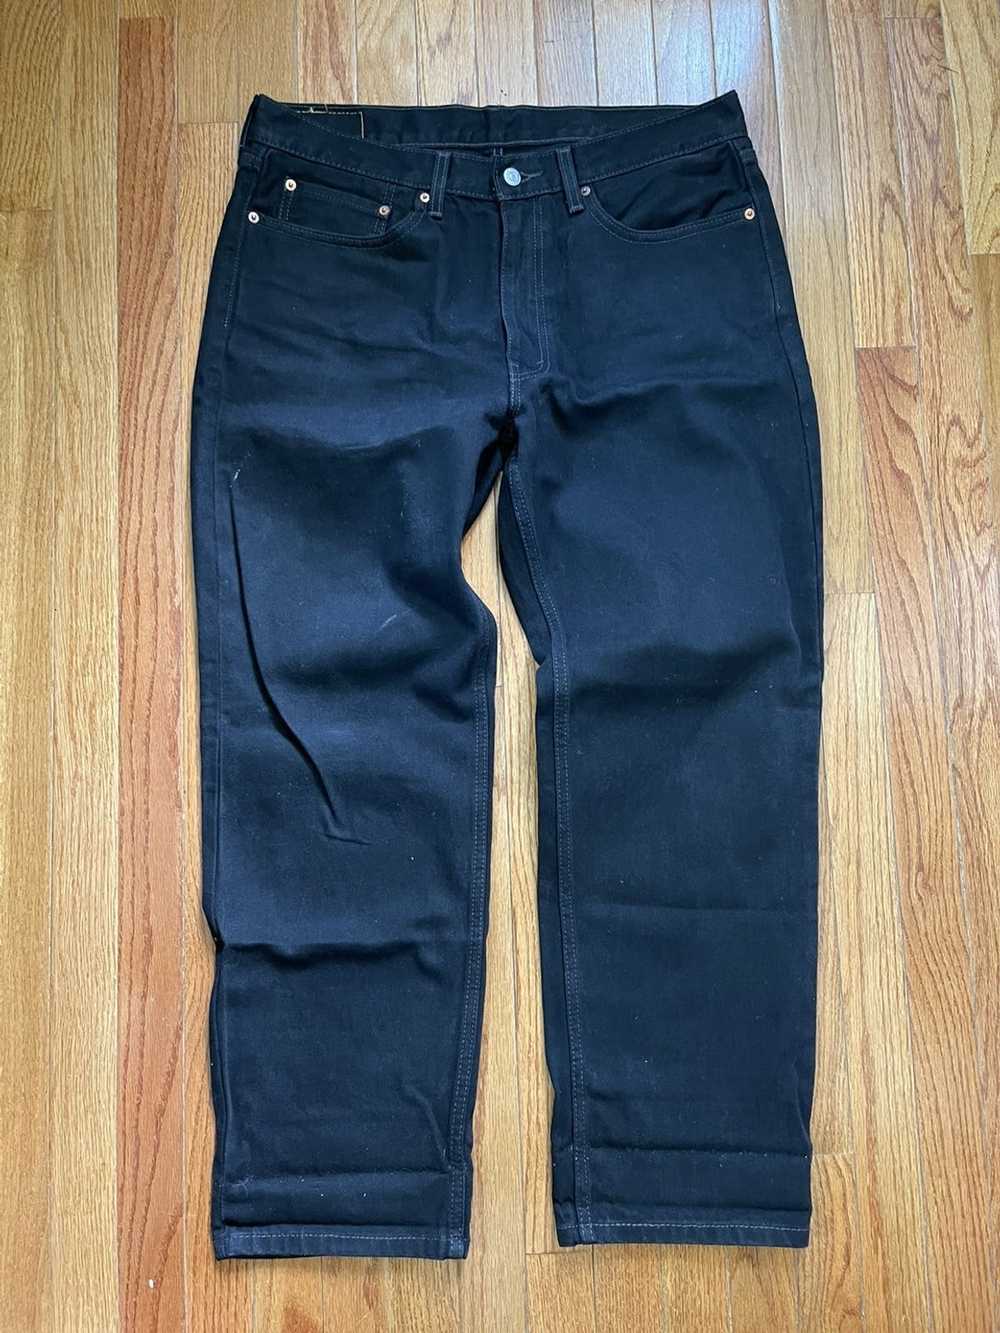 Levi's Black Levi’s 550 jeans - image 1